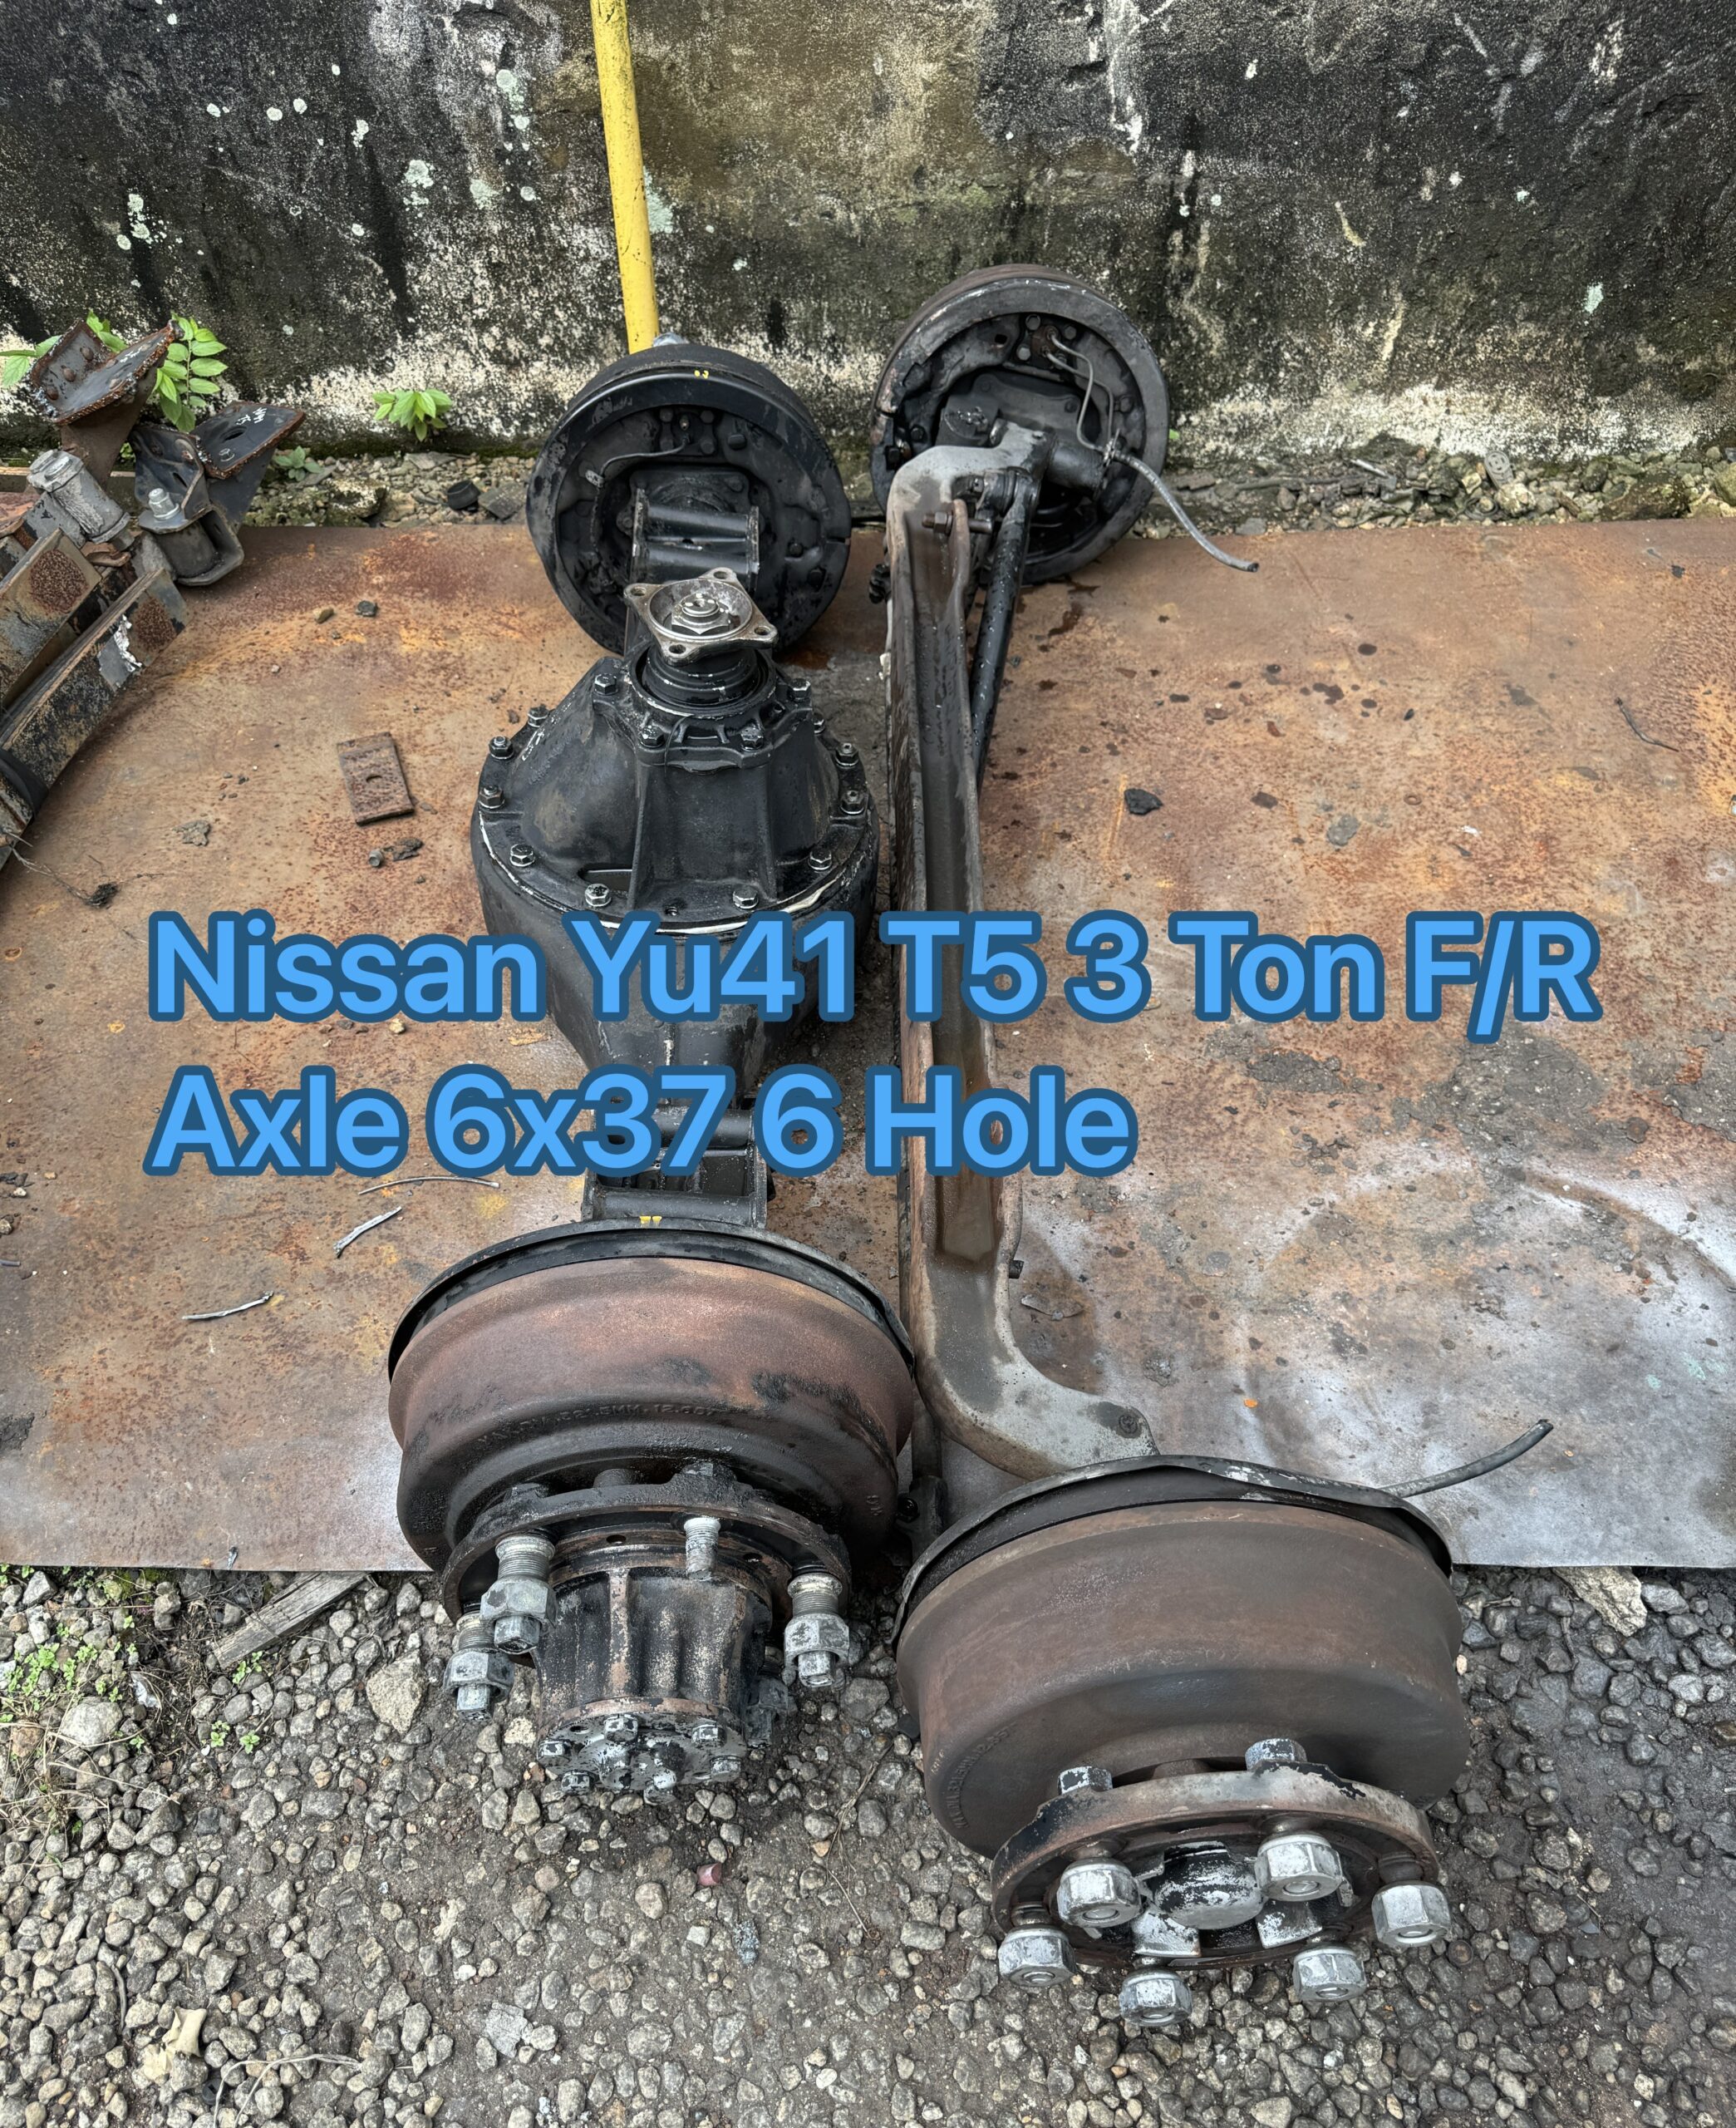 Nissan Yu41 T5 Front Rear Axle 6×37 6 Hole